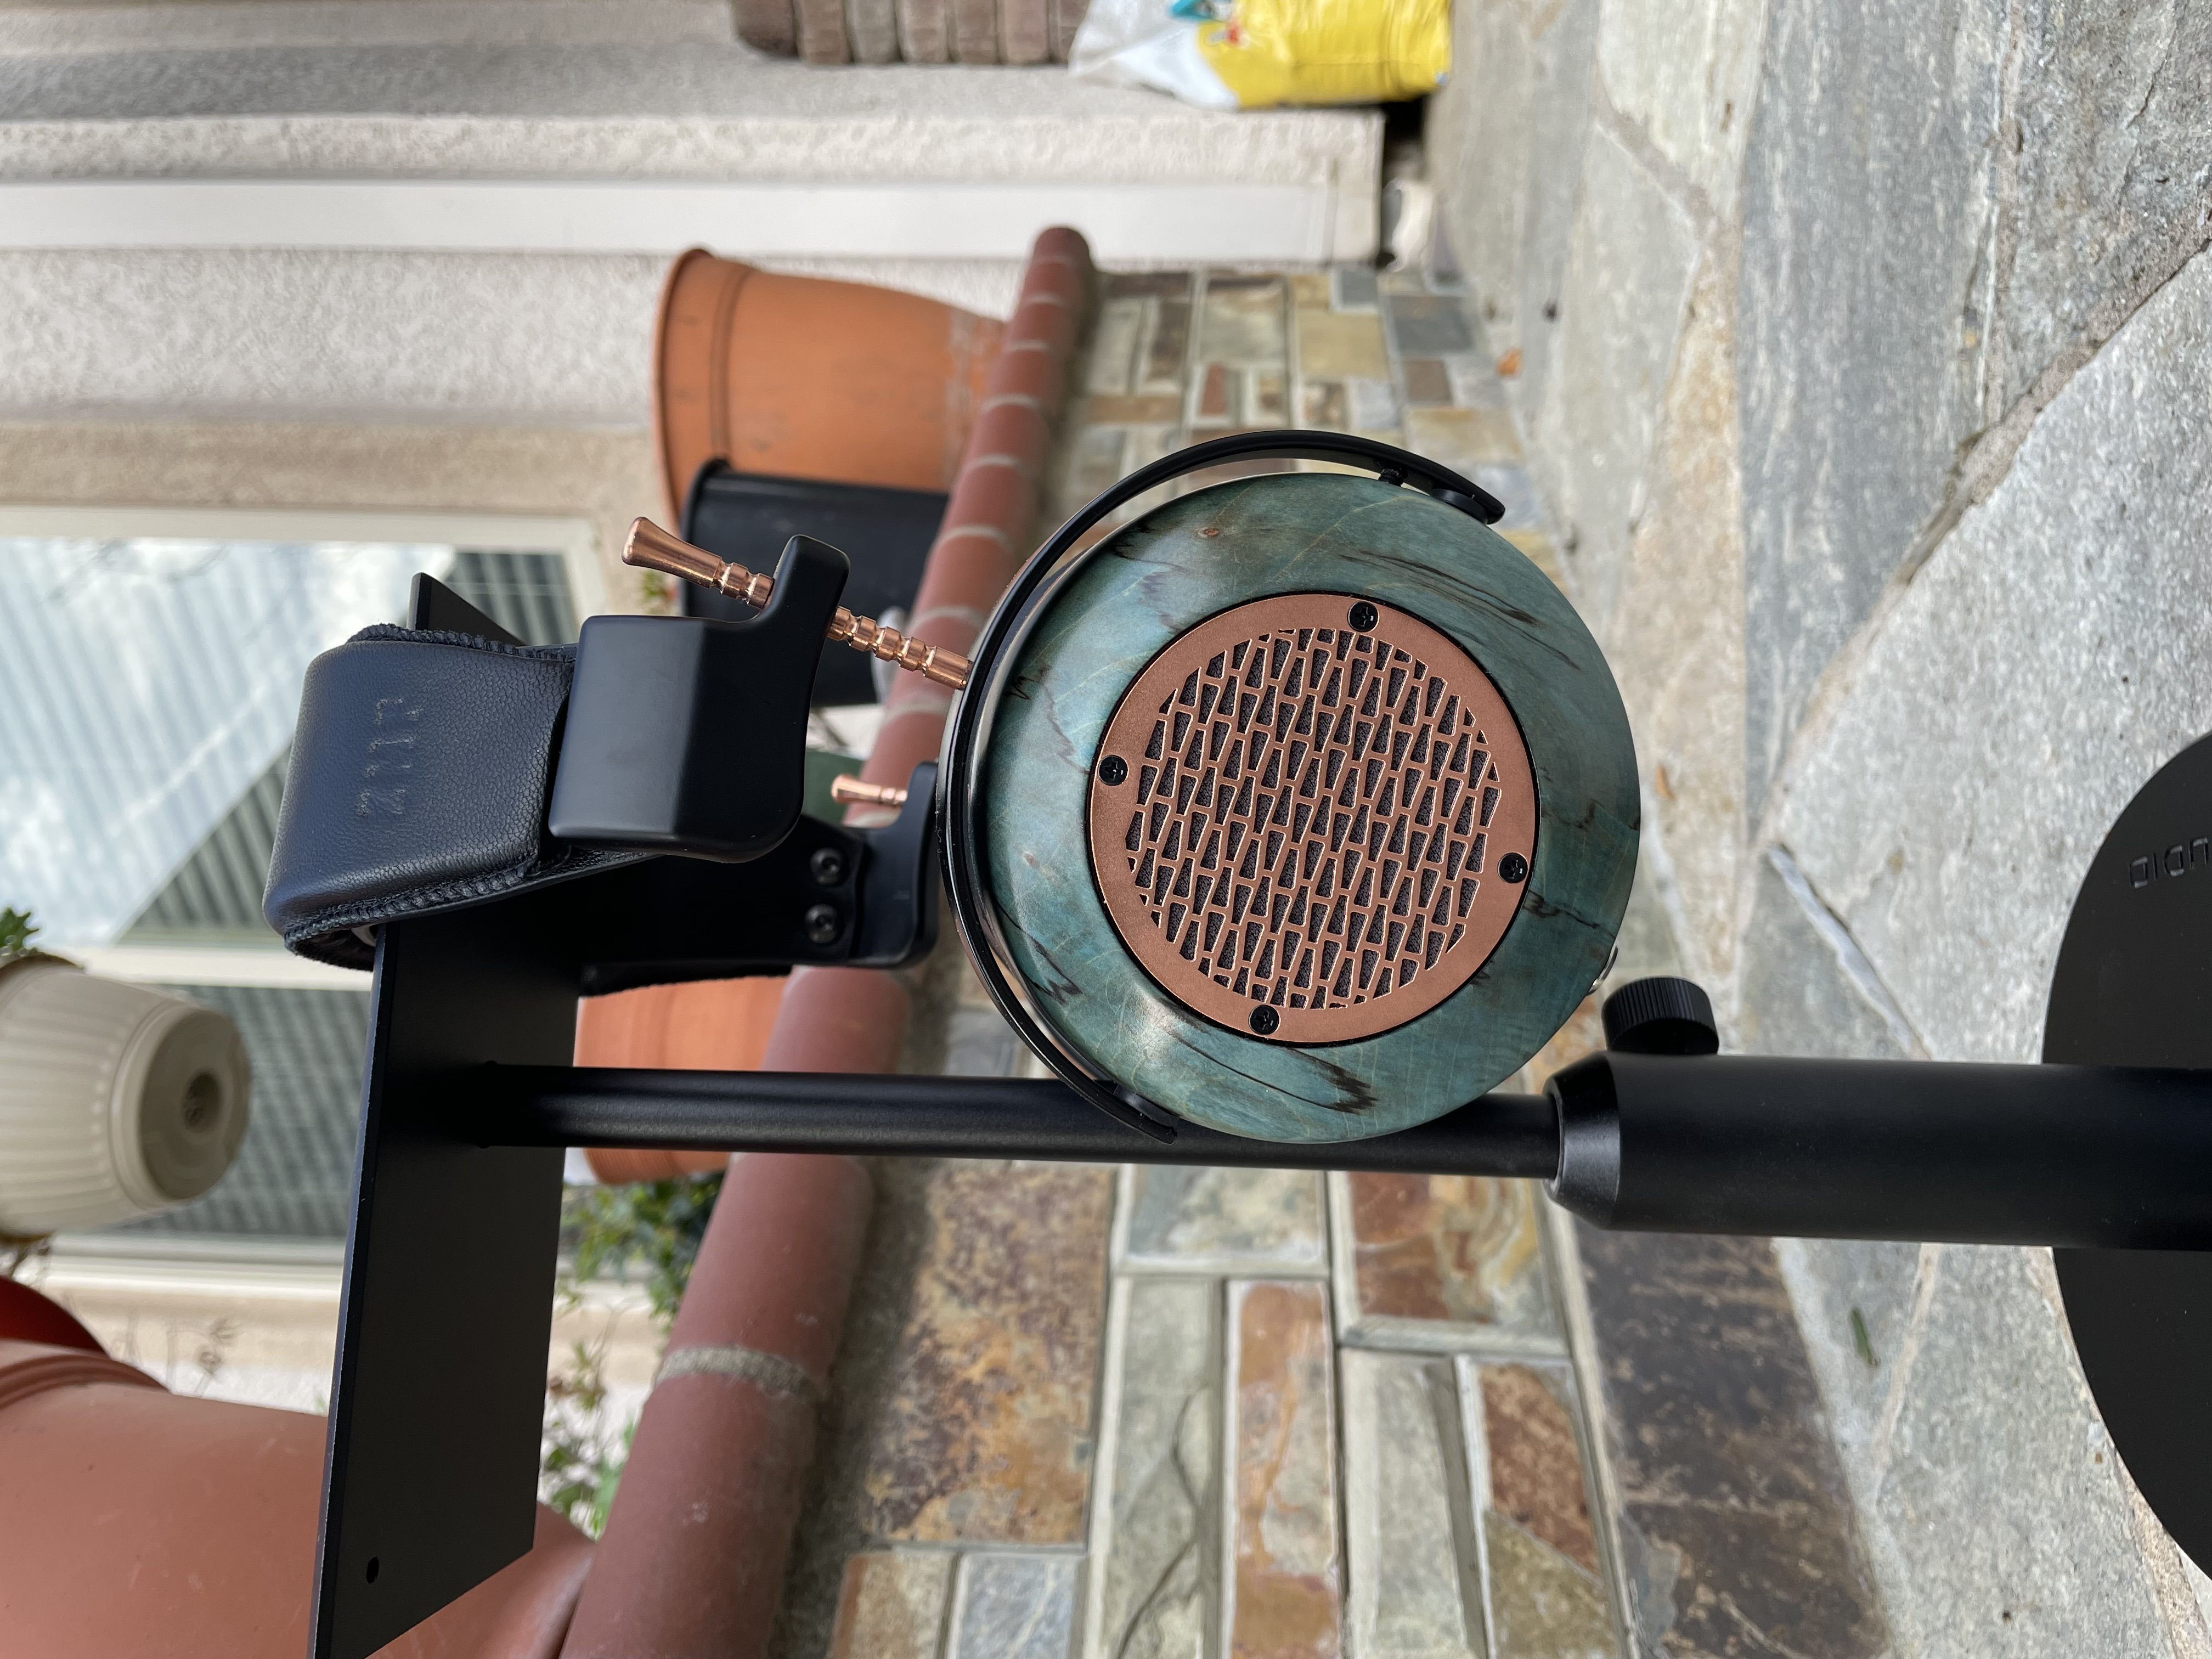 ZMF Auteur (Vaskas) on a Woo Audio headphone stand in backyard #4